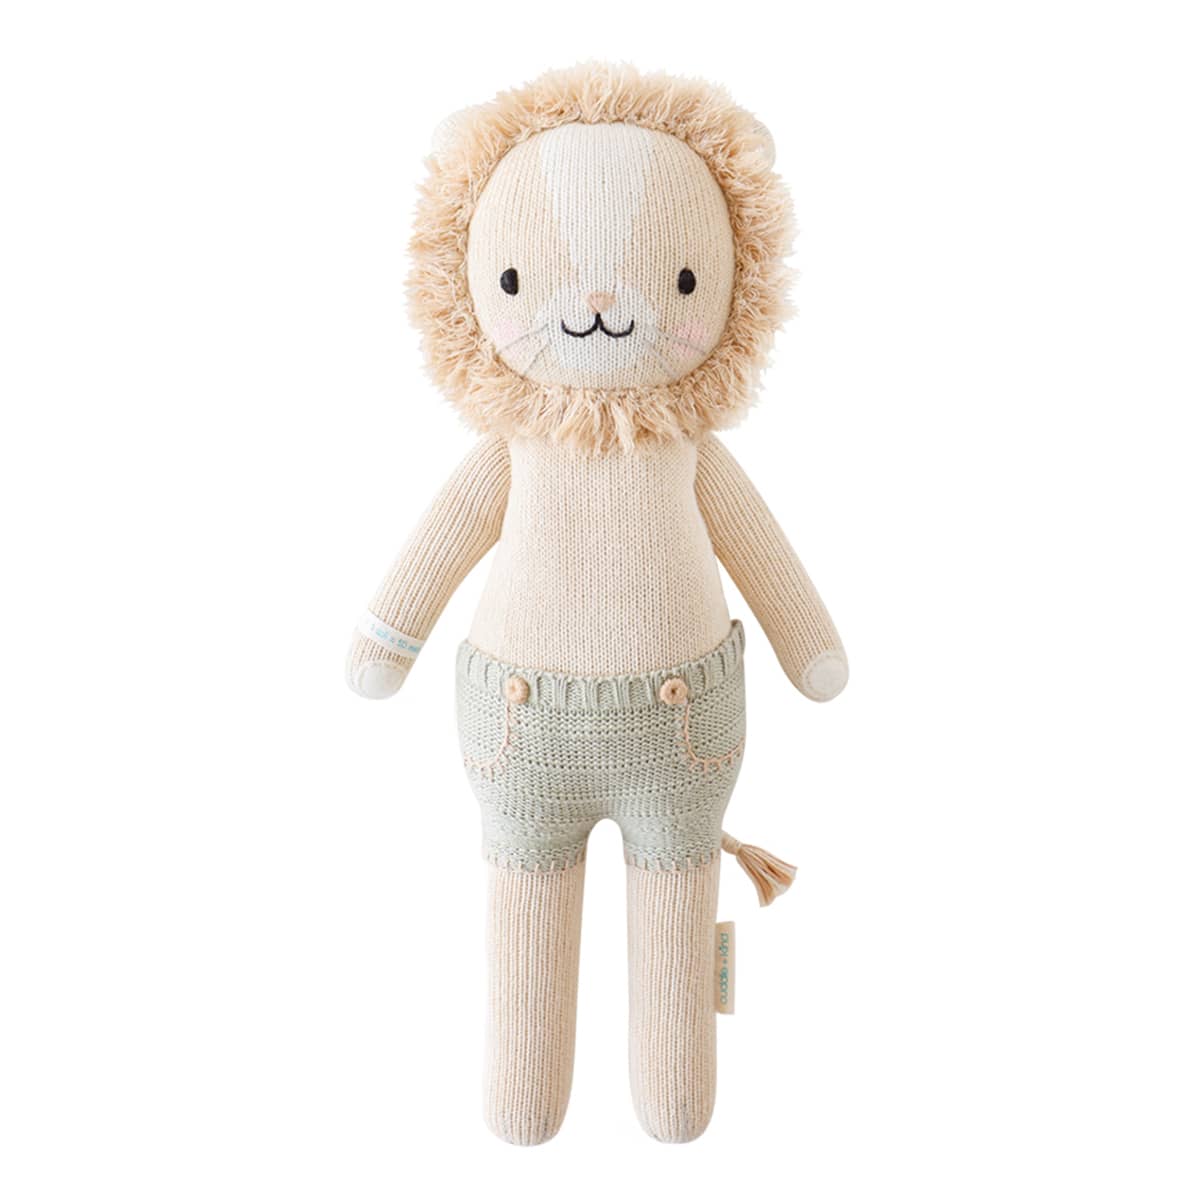 Cuddle + Kind Hand-Knit Doll - Sawyer the Lion